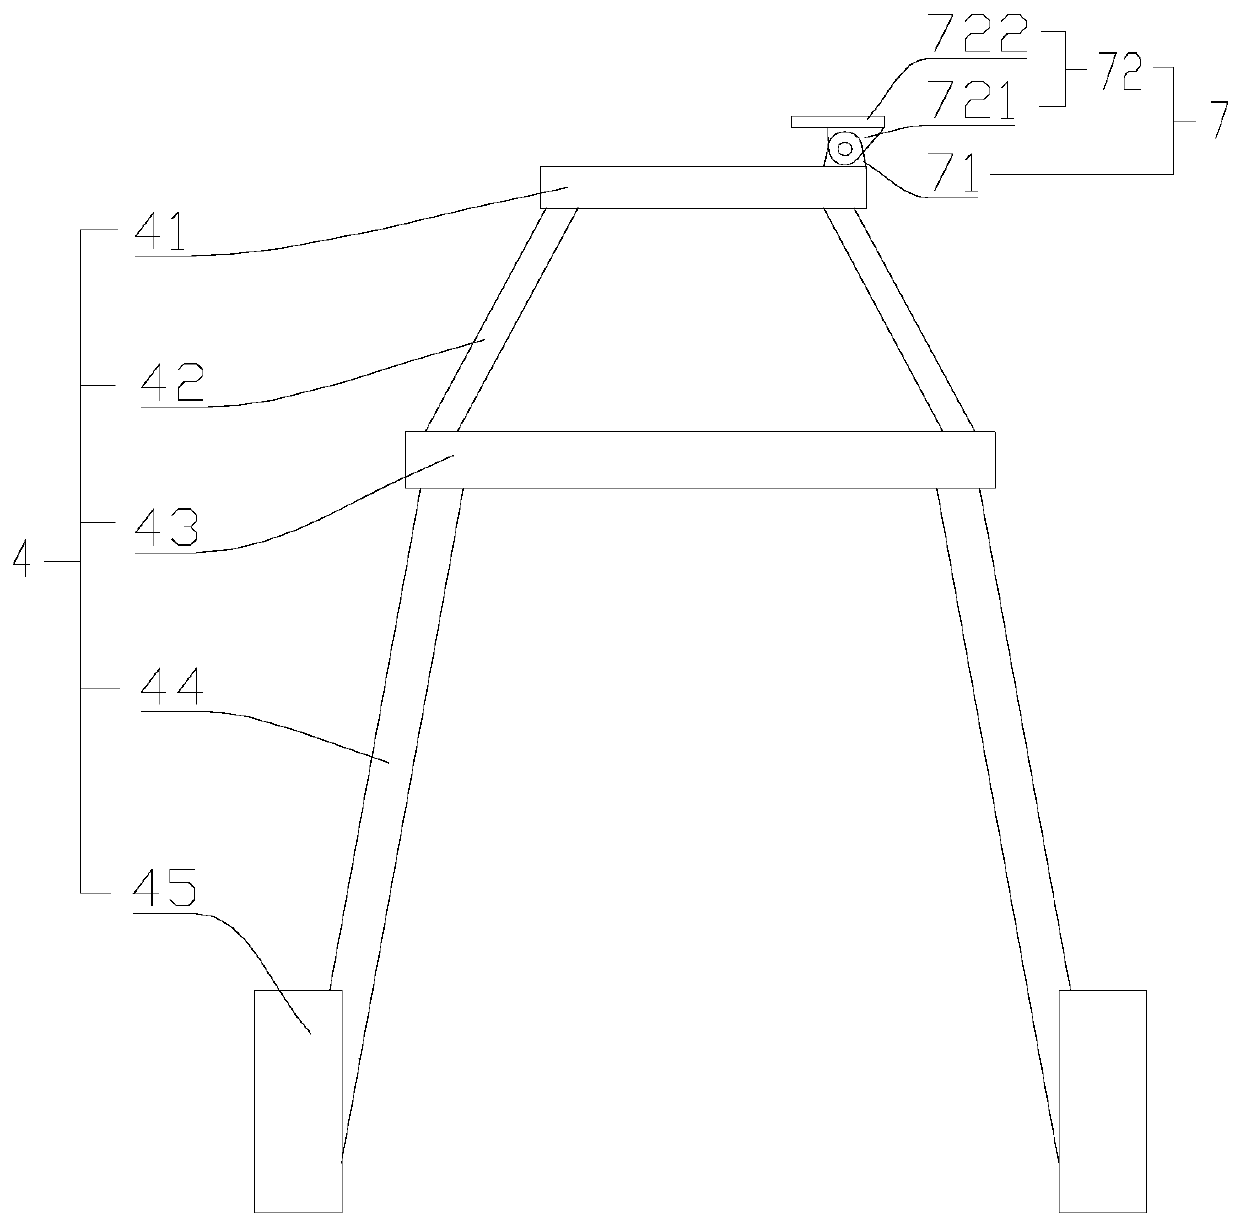 Single-point hoisting type pile erecting system and construction method for pile erecting